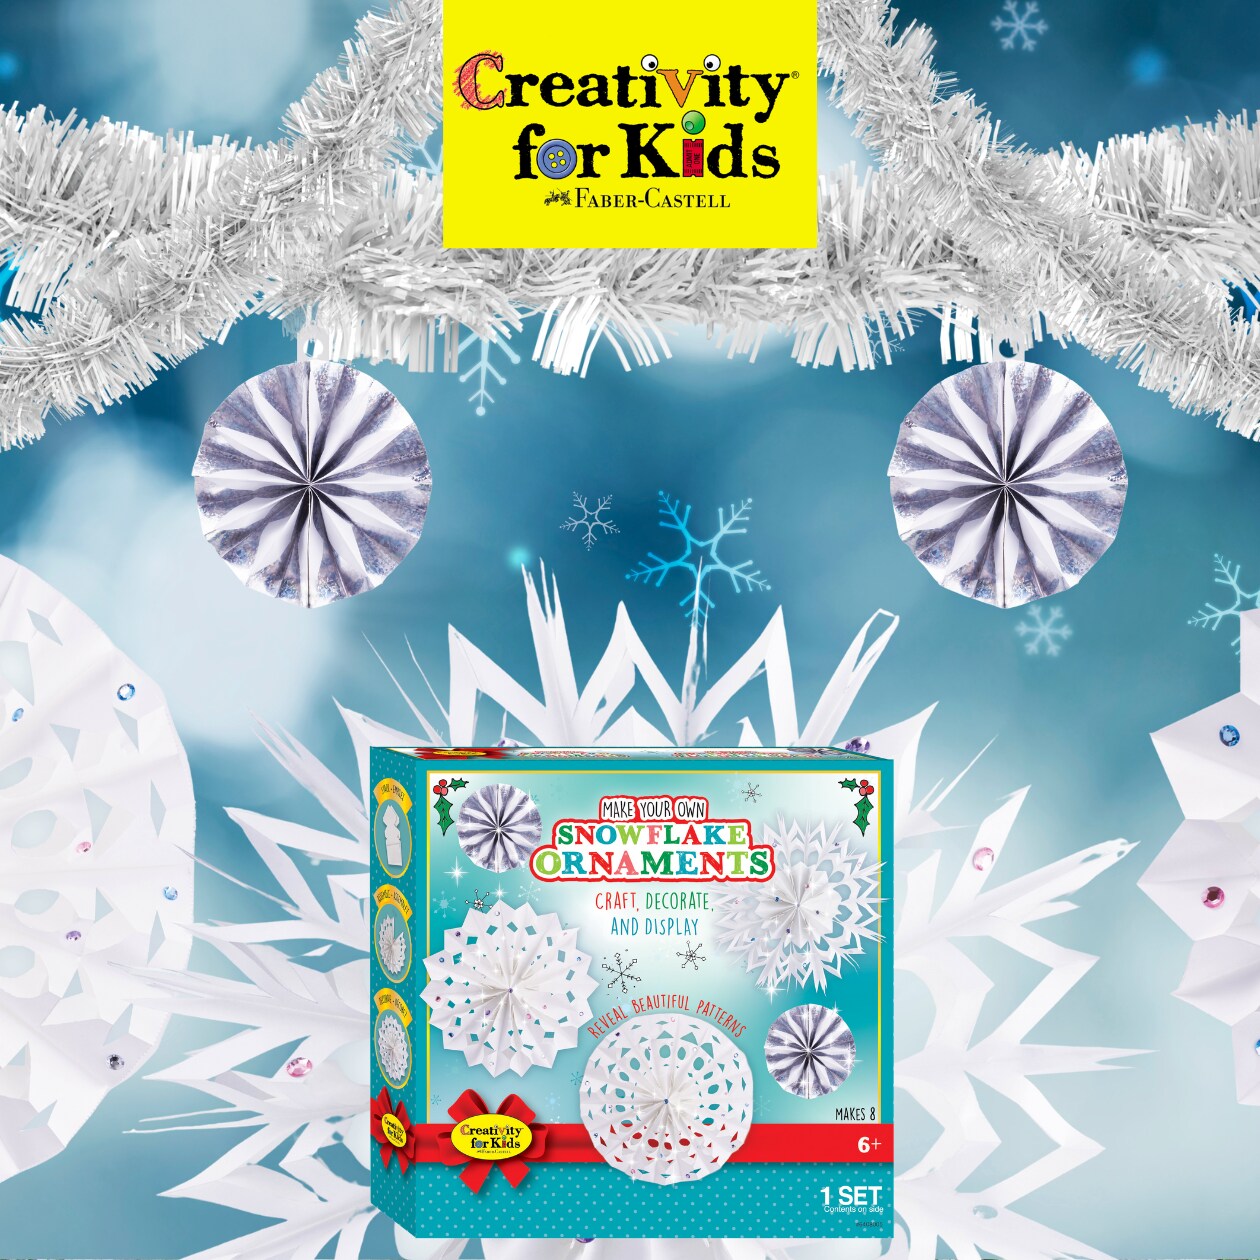 Kids Club: Make Your Own Snowflake Ornaments